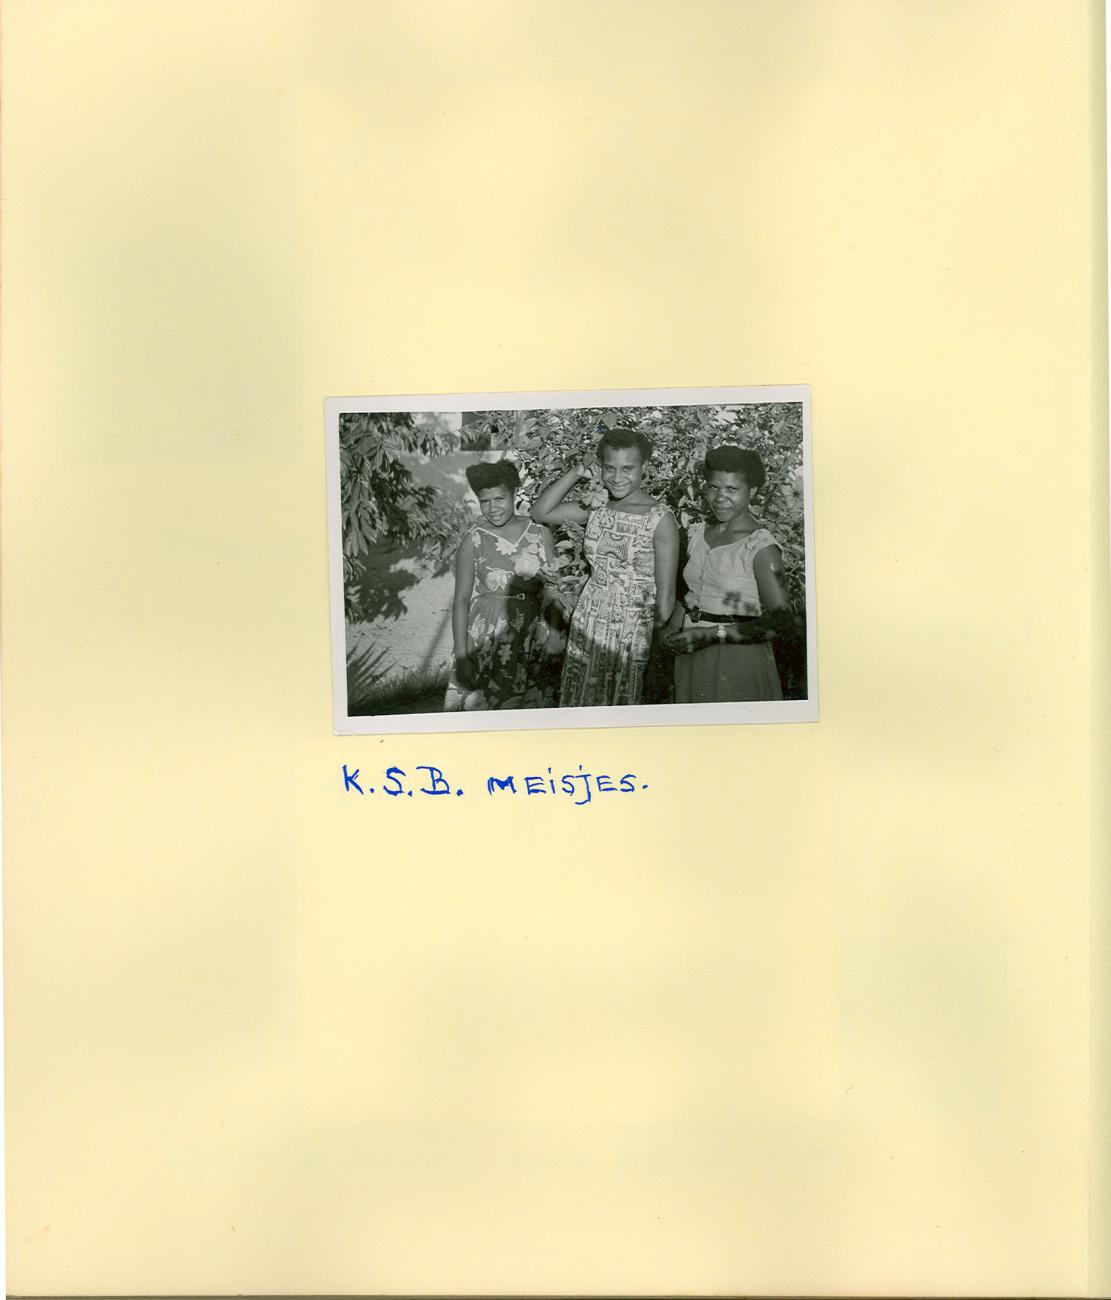 BD/83/24 - 
Portrait of three KSB girls (Catholic Social Union)
